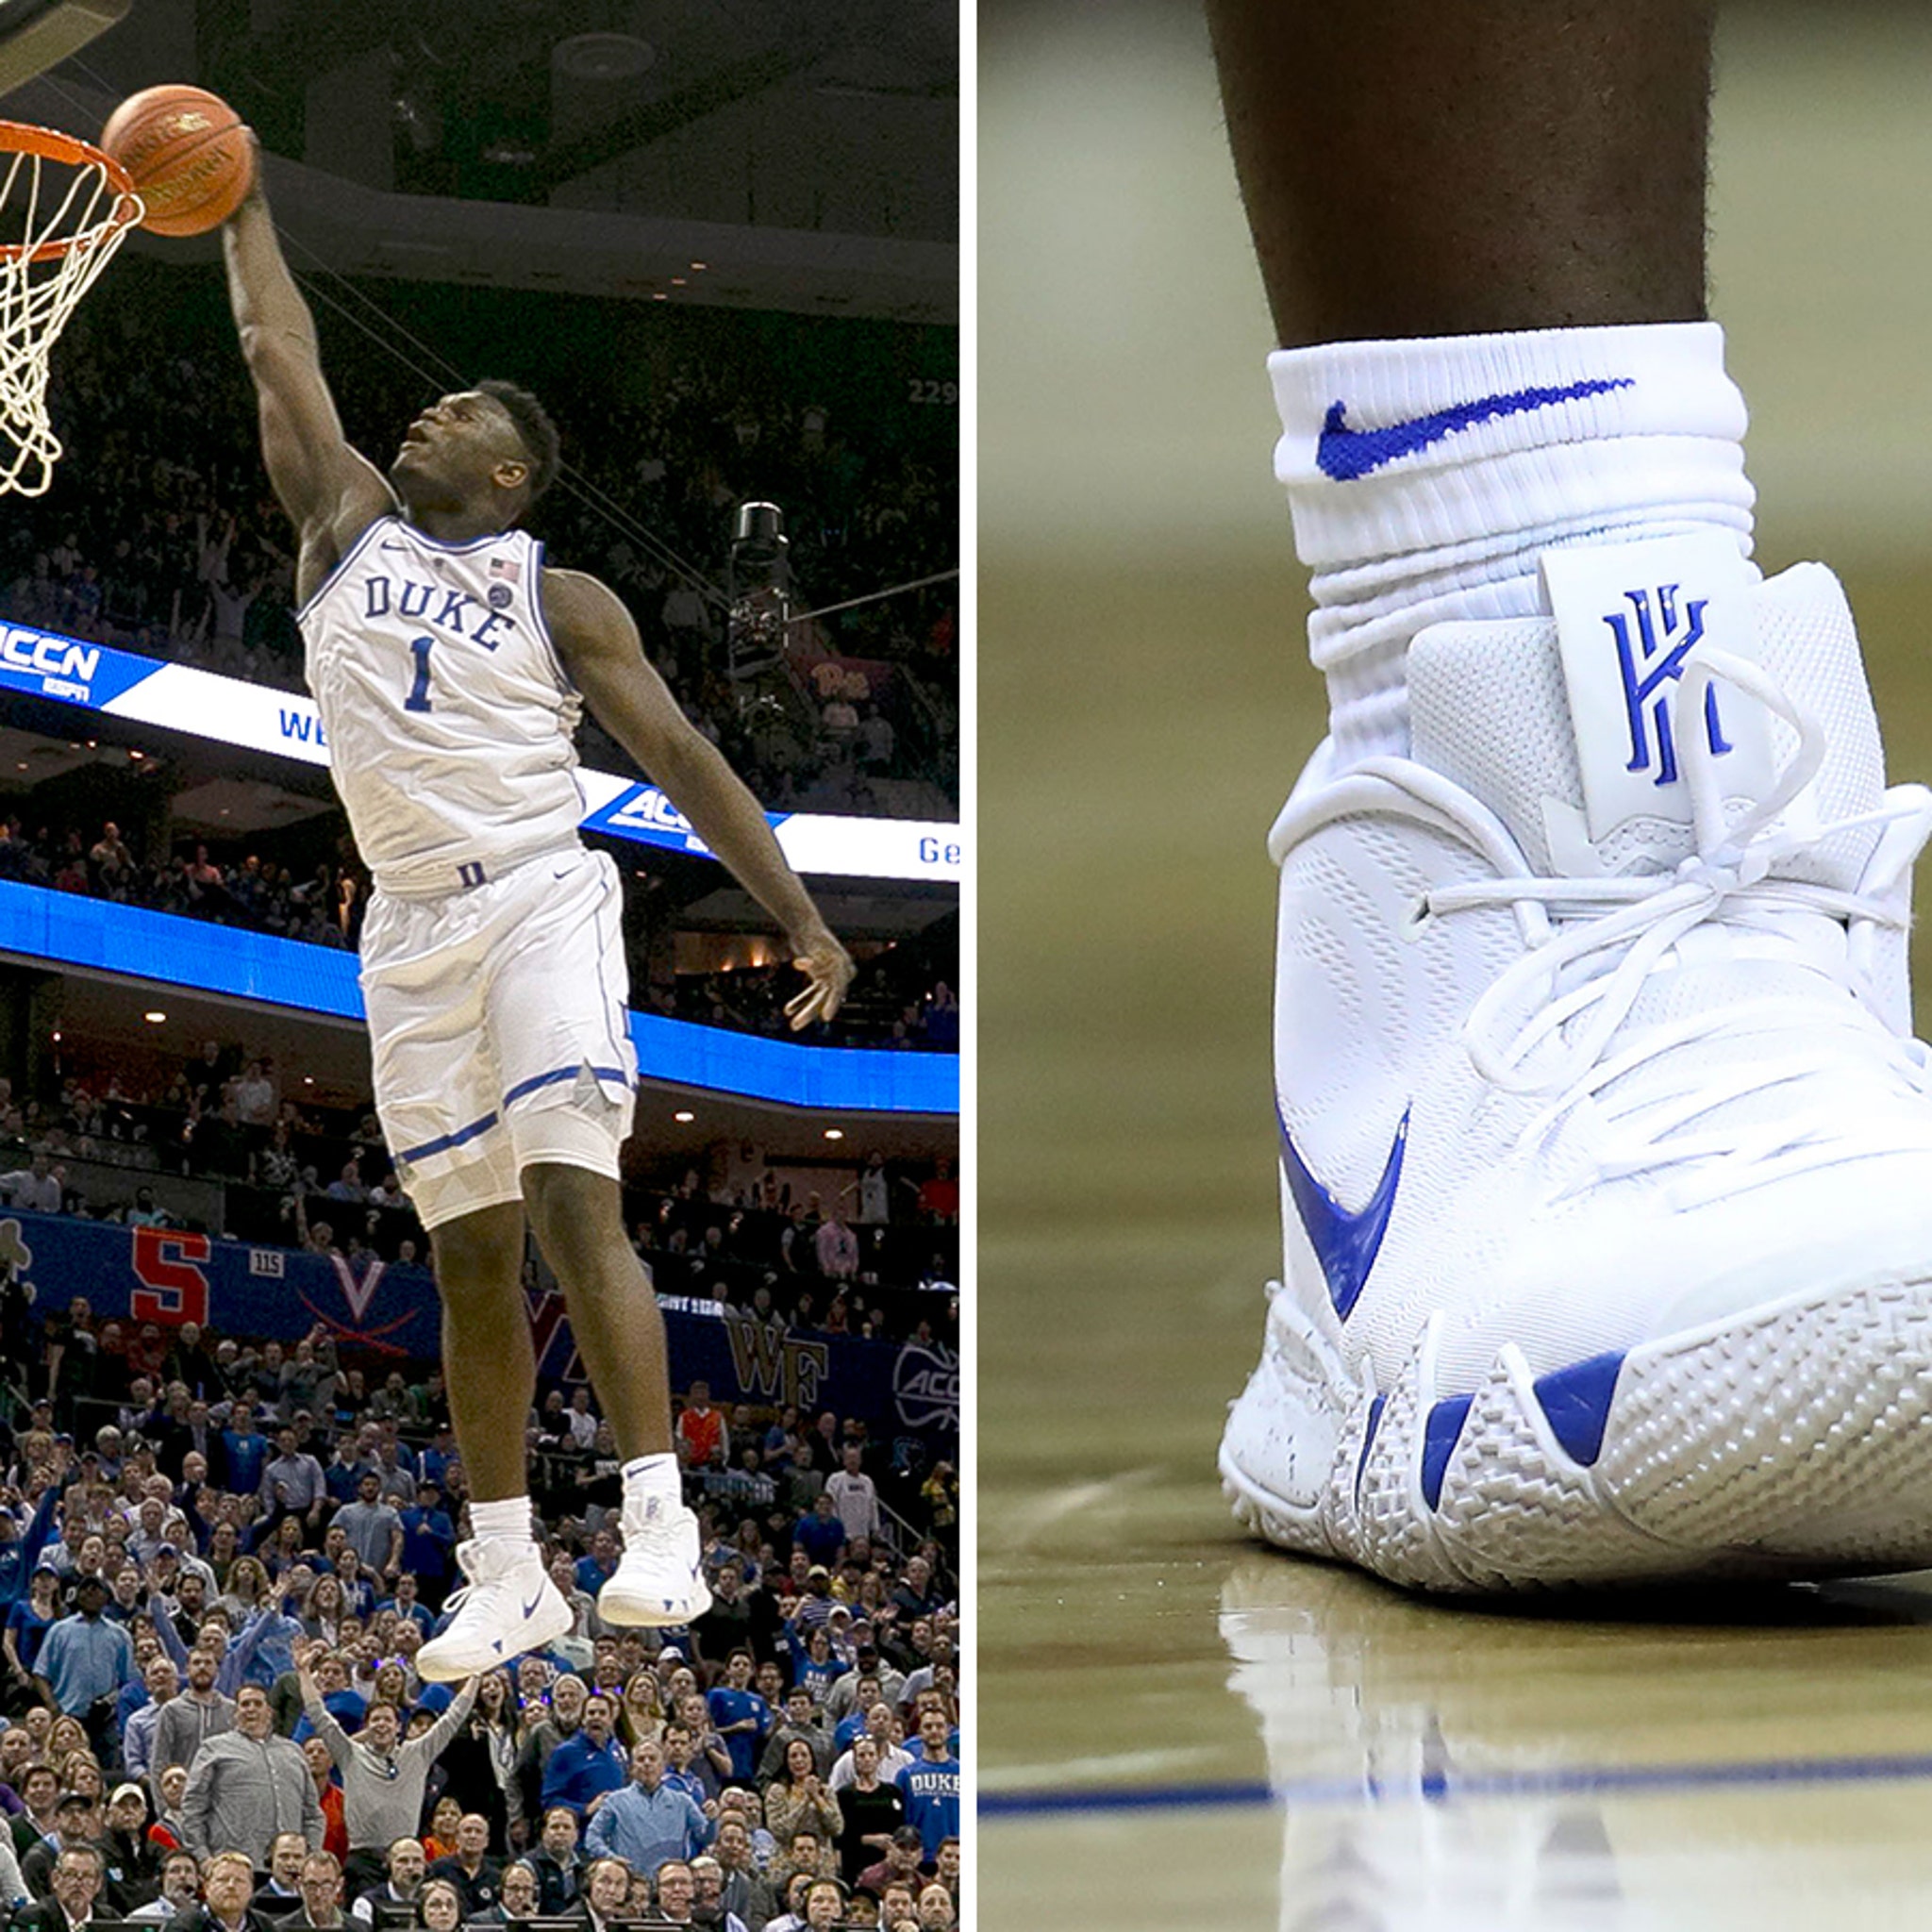 Duke player Zion Williamson injured when Nike shoe blows apart in game